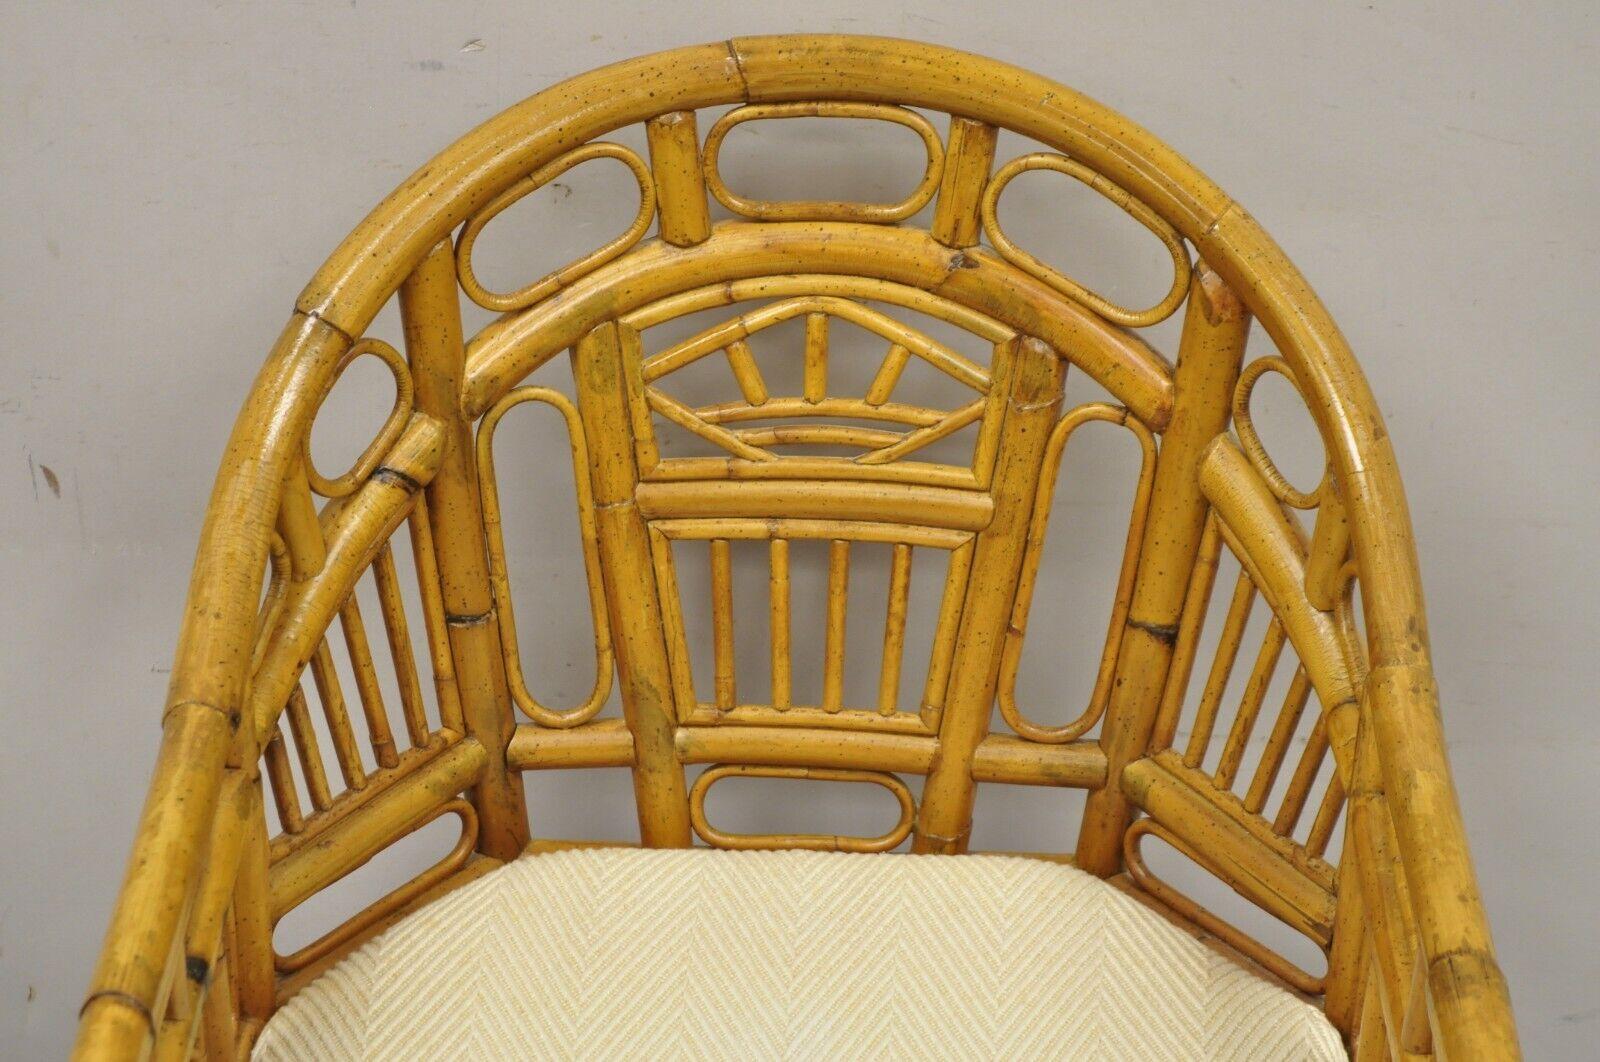 bamboo chair